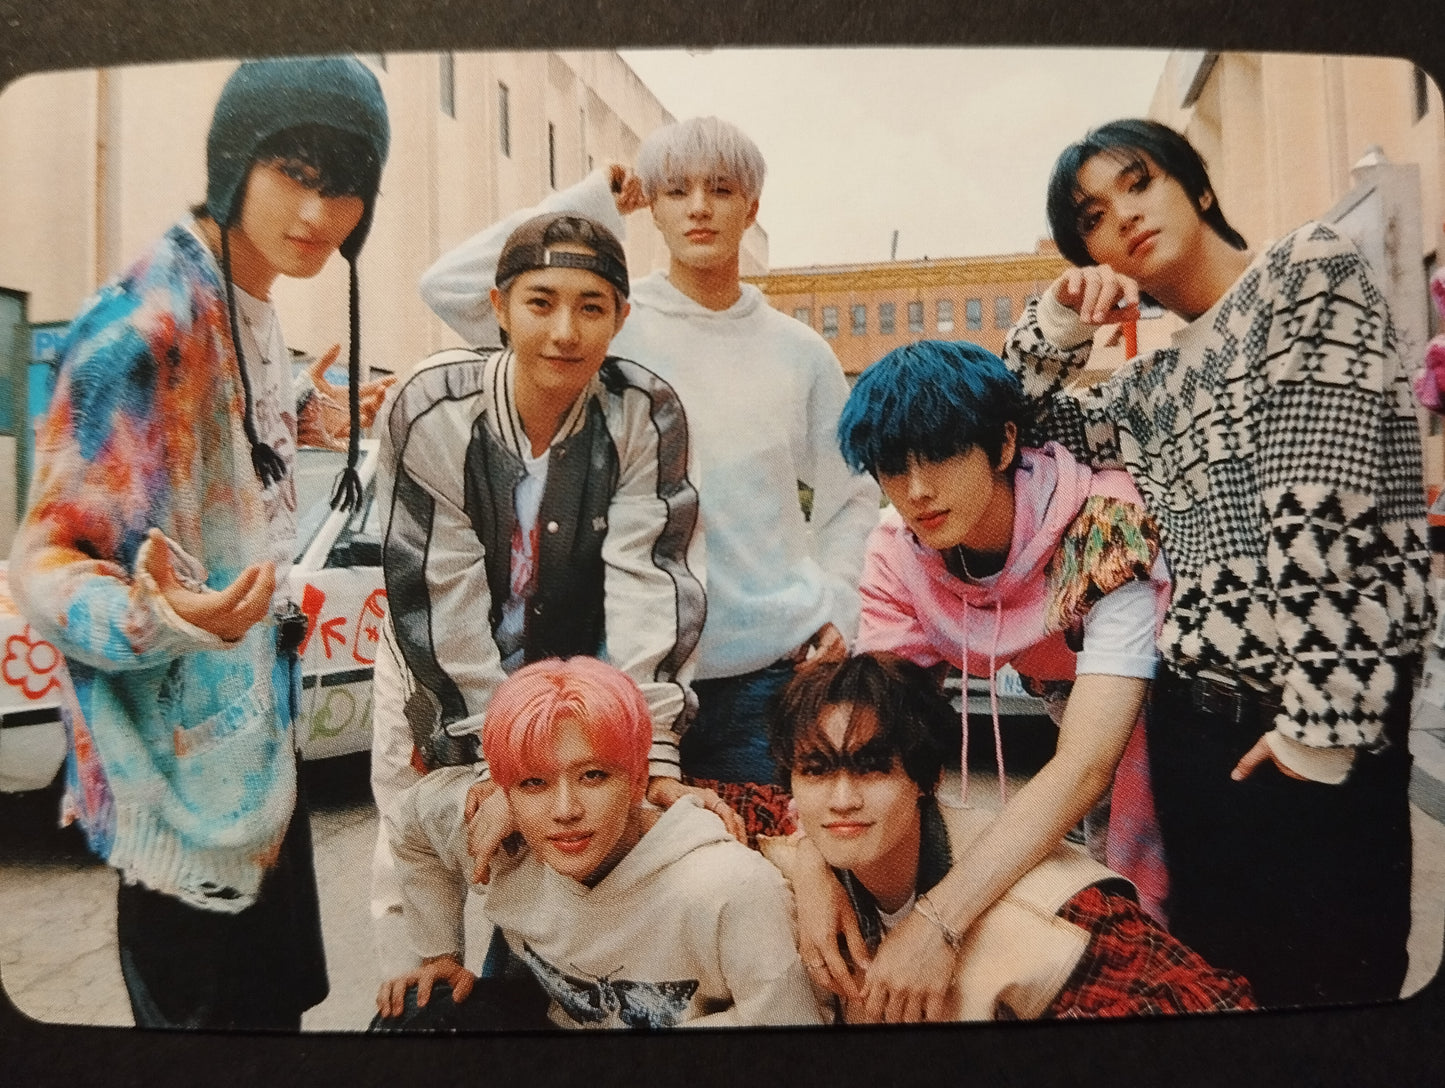 Photocard NCT Dream Broken memories